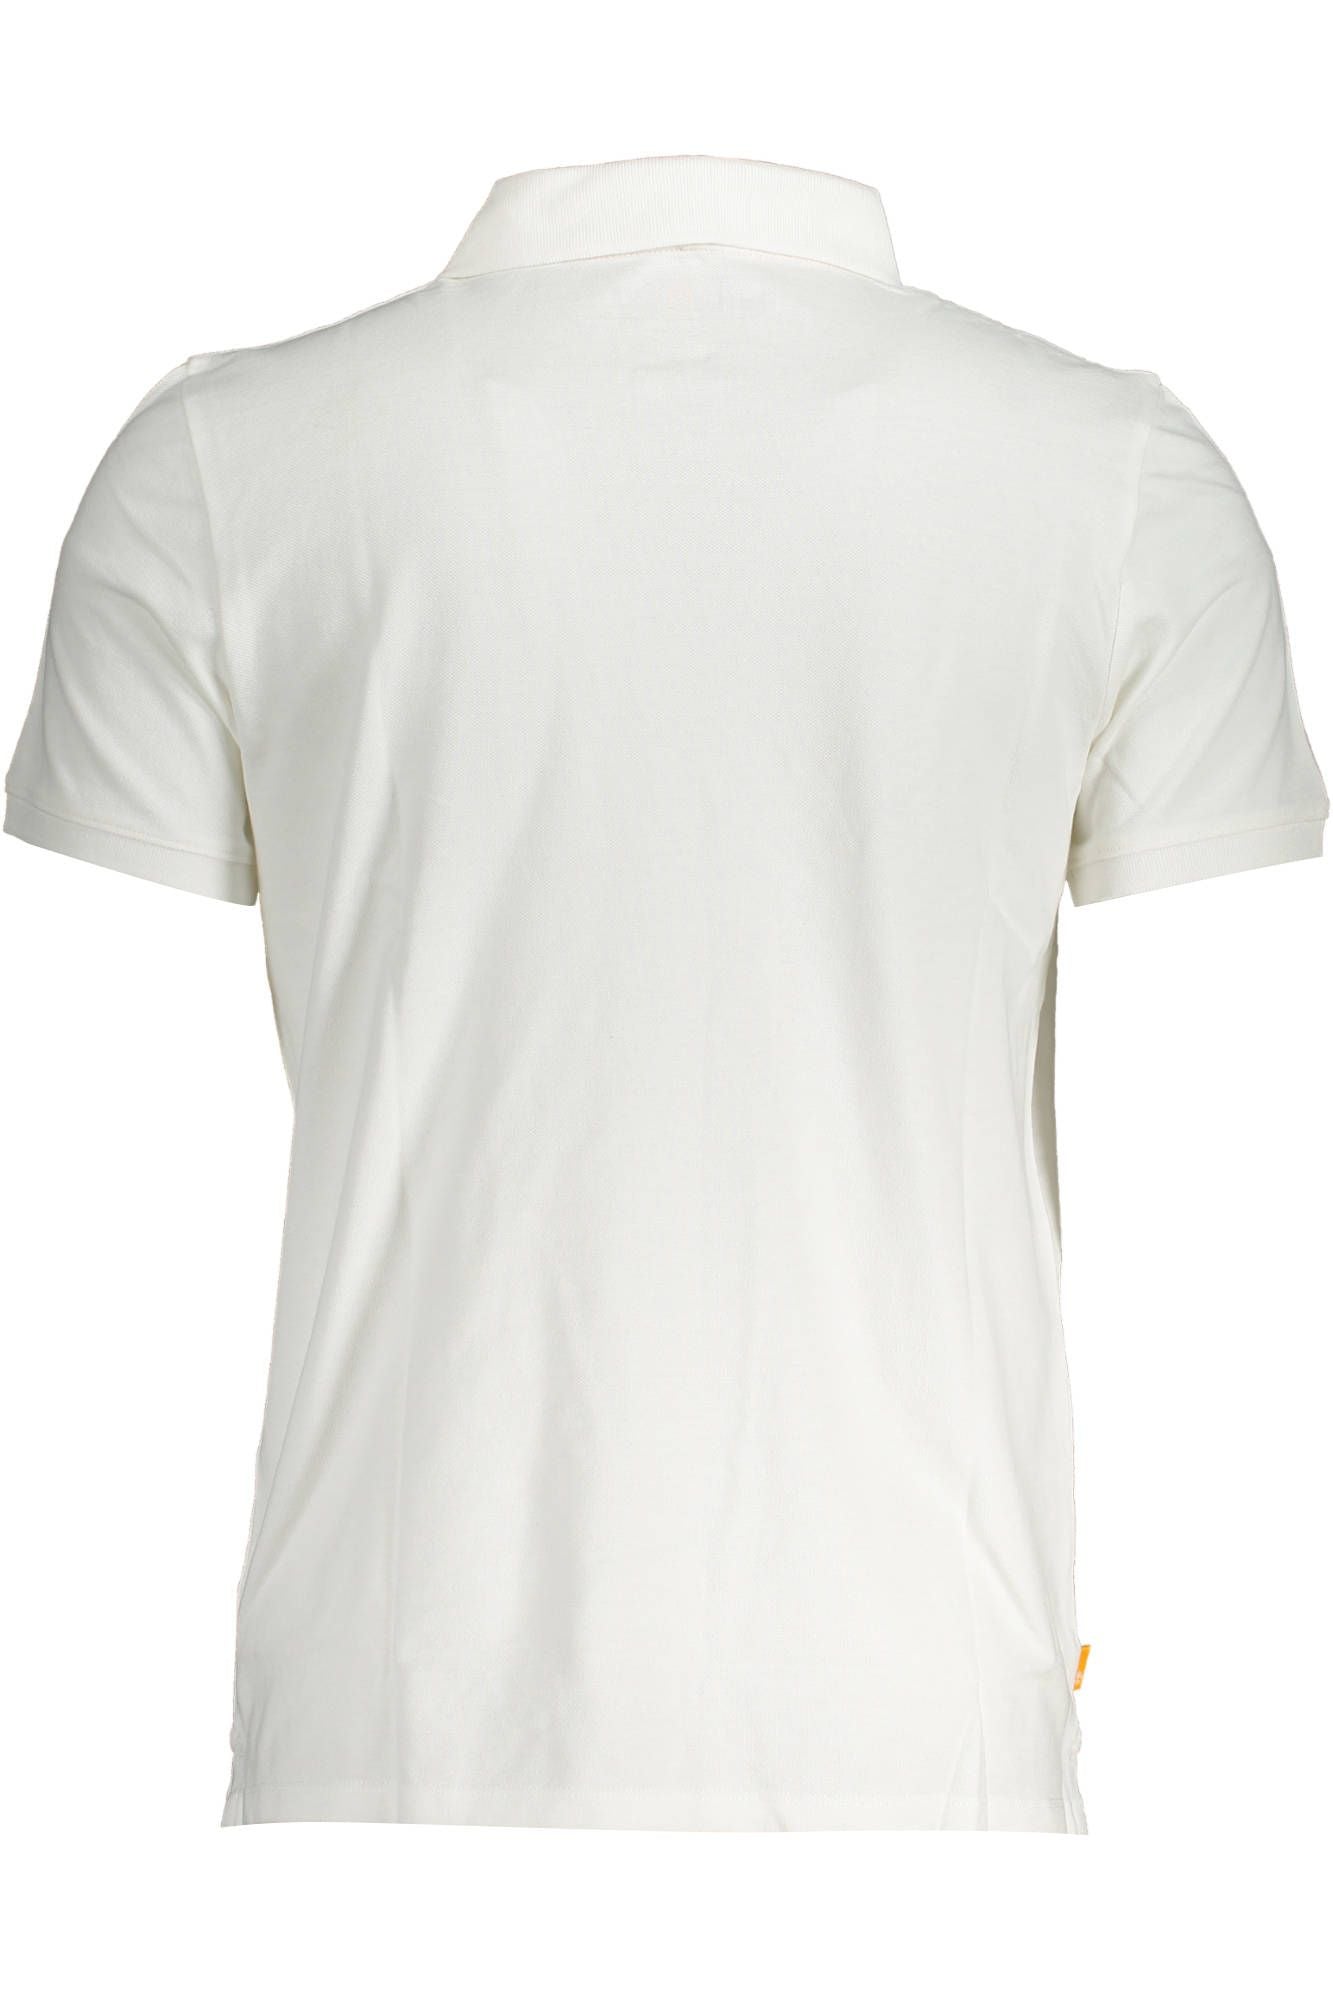 Timberland White Cotton Polo Shirt